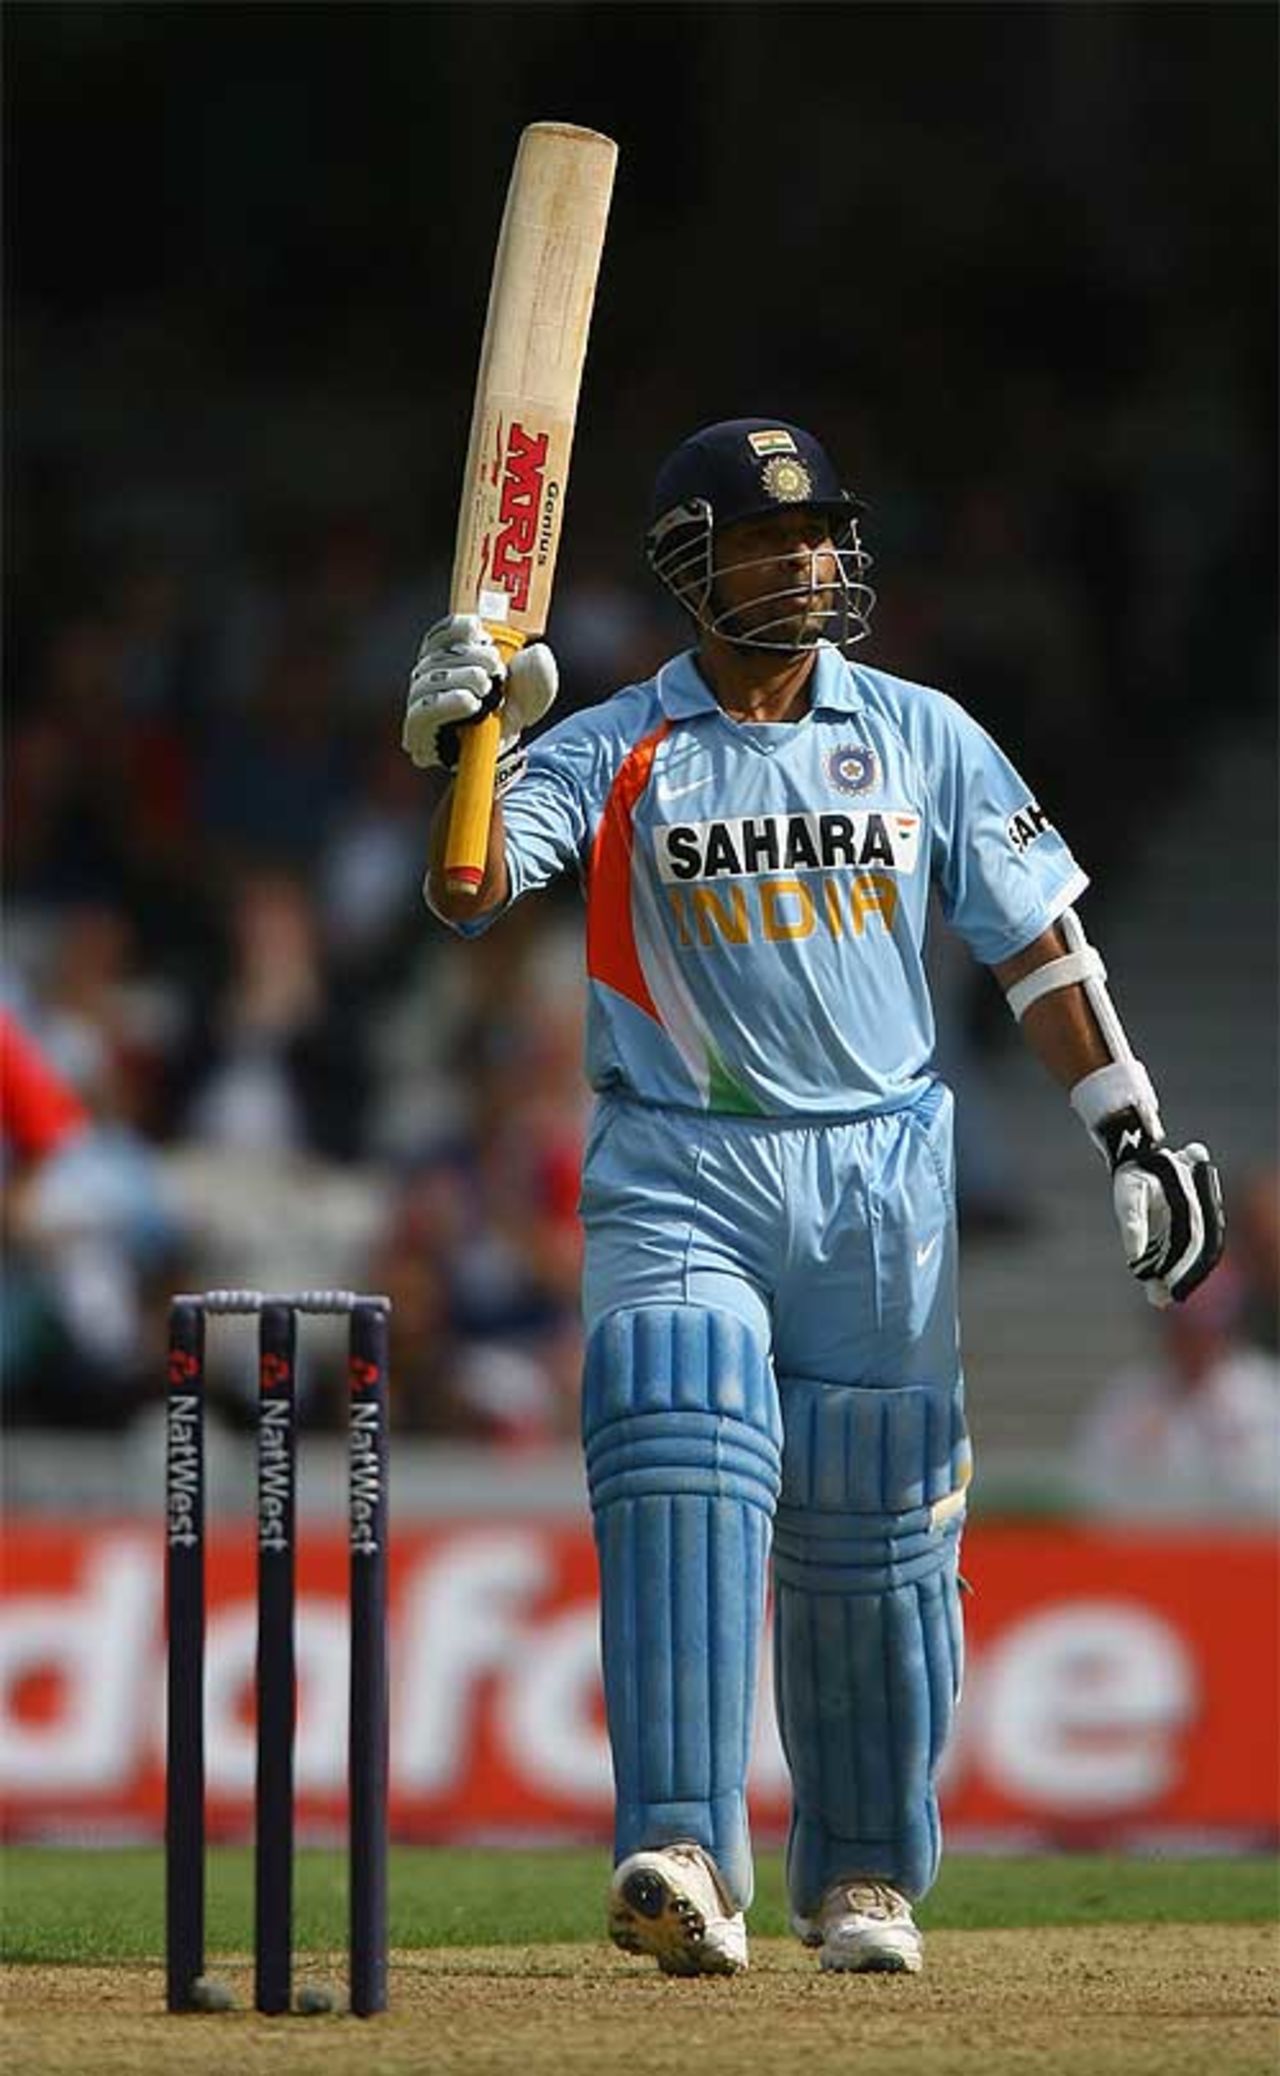 Sachin Tendulkar acknowledges the applause as he reaches his 83rd half-century, England v India, 6th ODI, The Oval, September 5, 2007